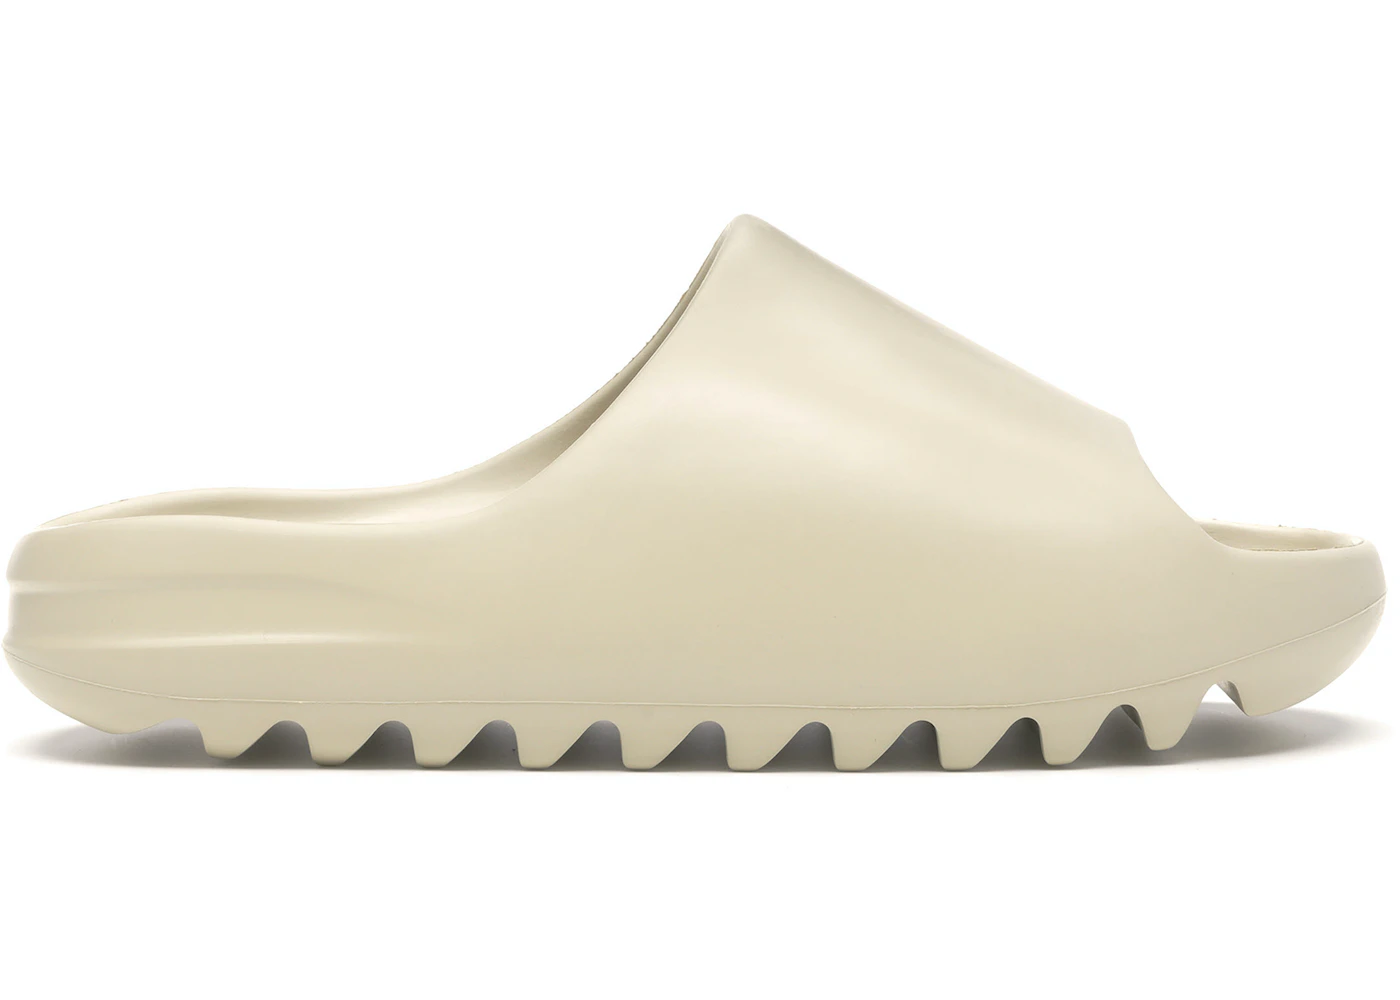 inertia tone Portico adidas Yeezy Slide Bone - FW6345 - US